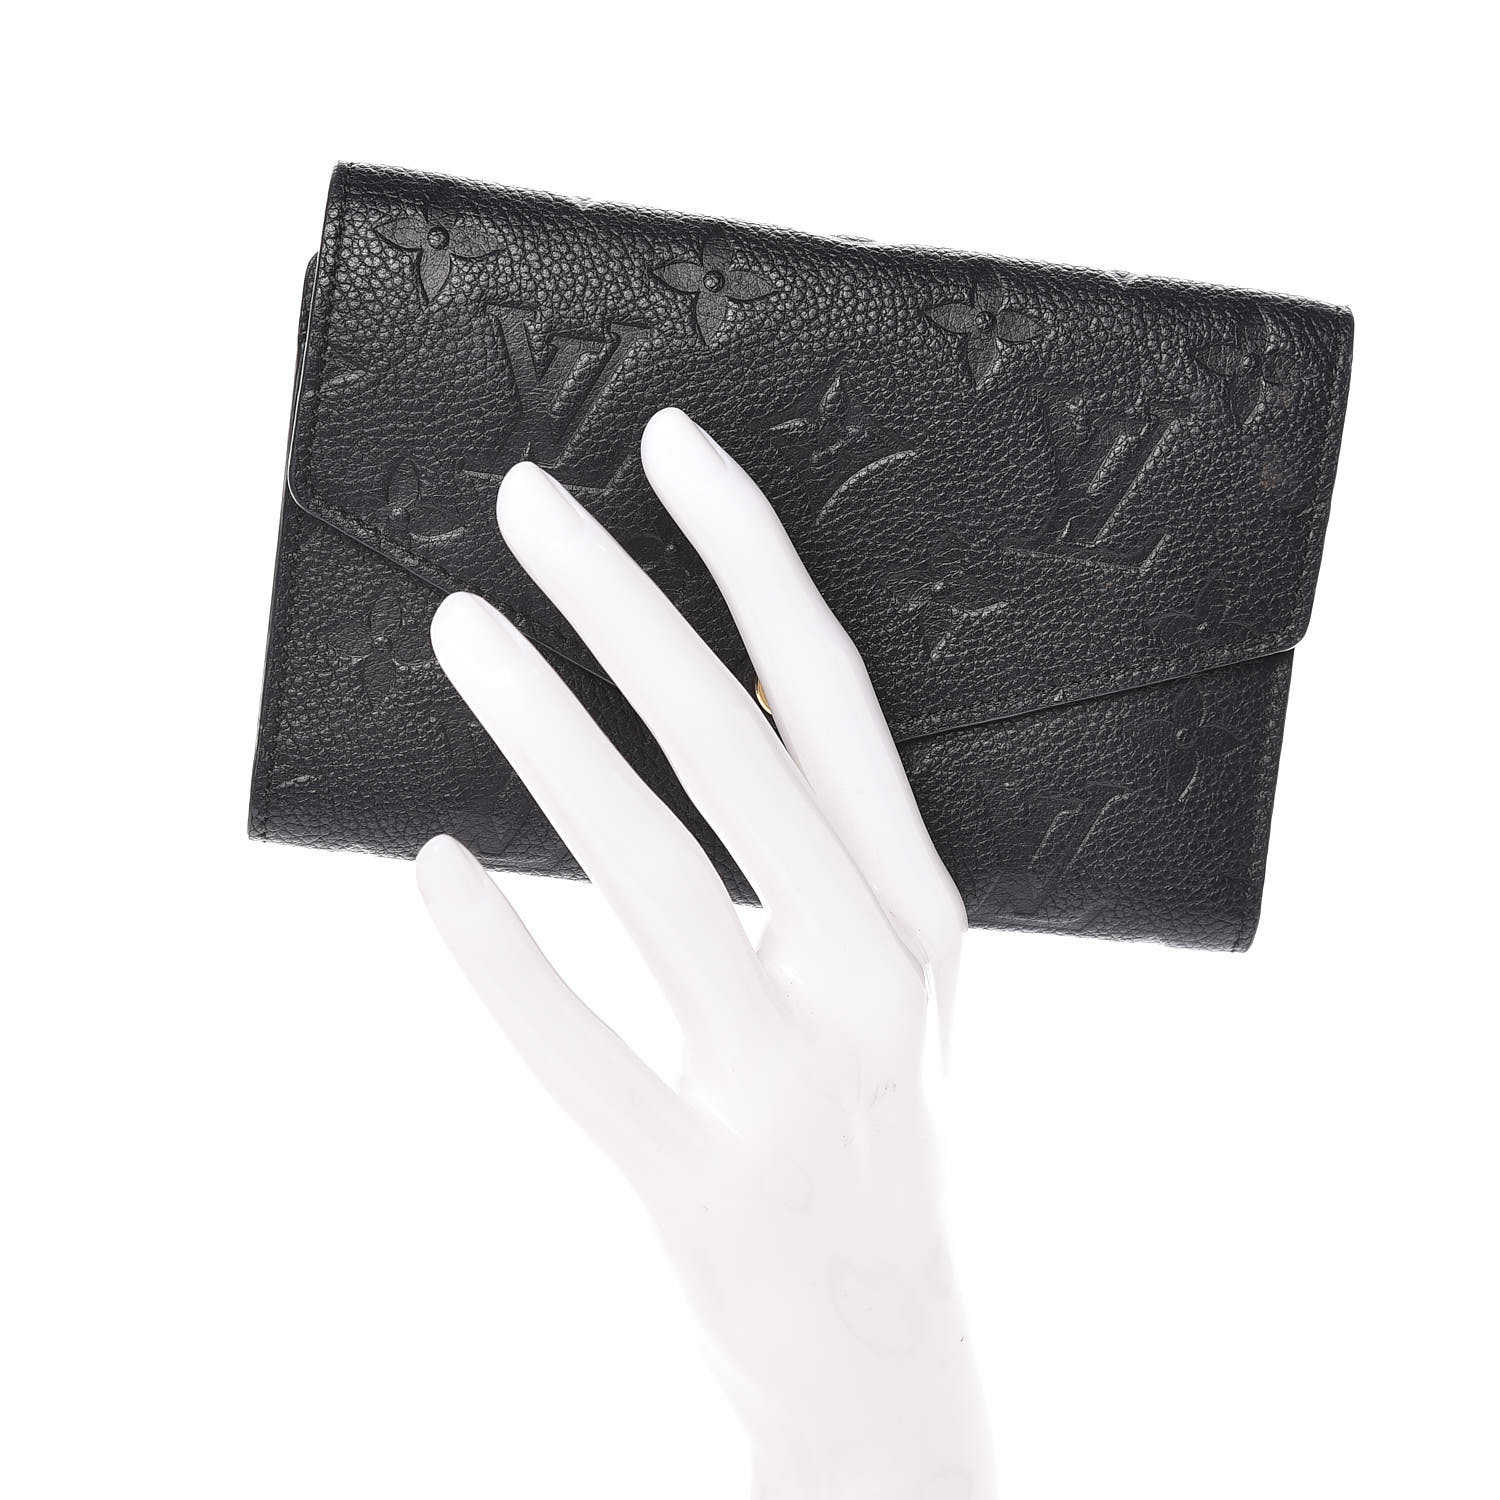 LOUIS VUITTON Empreinte Compact Curieuse Wallet Black 400845